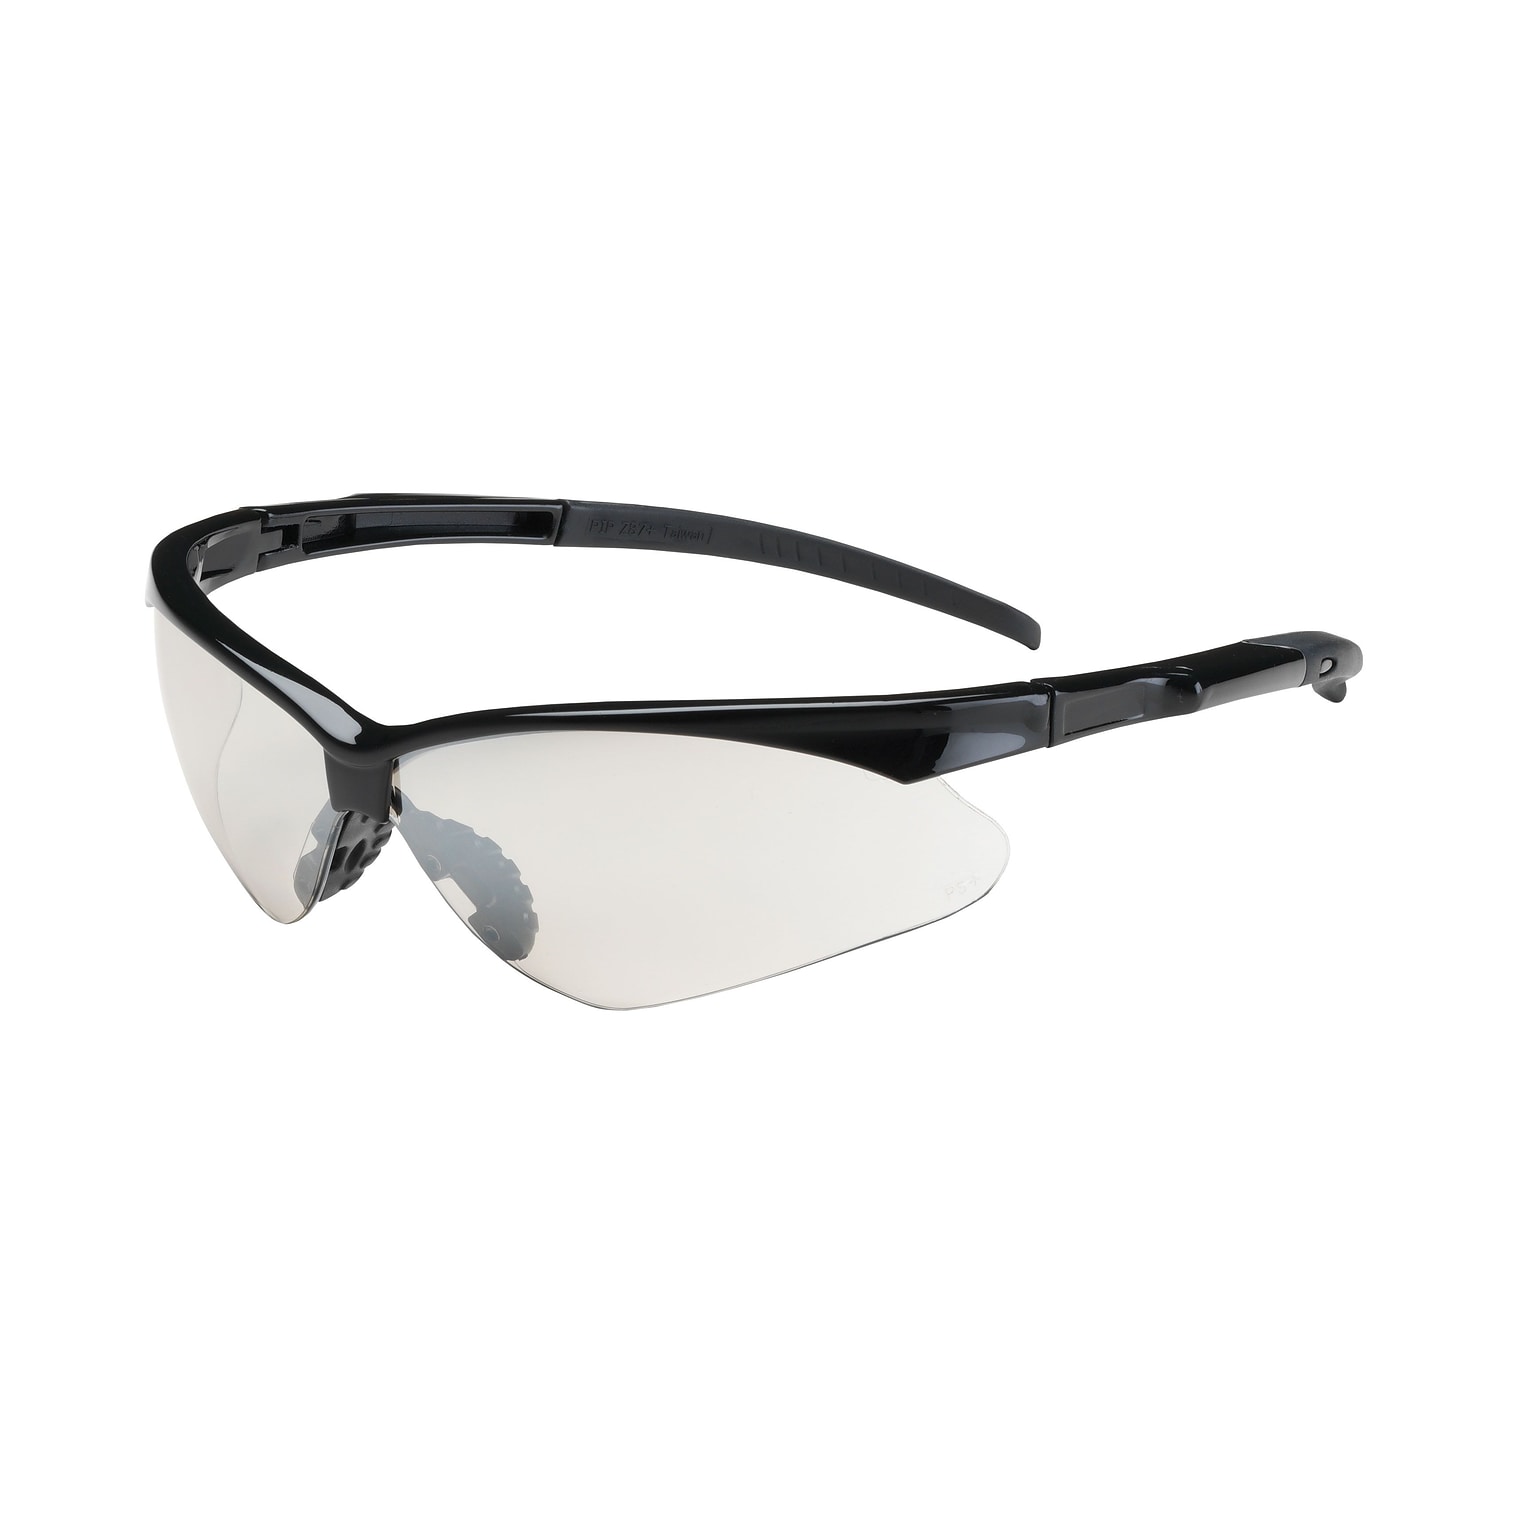 Bouton® Adversary Glasses, Clear Anti-Fog Lens, Glossy Black Frame, Rubber Temples & Bridge, Anti-Scratch, Each (250-28-0020)